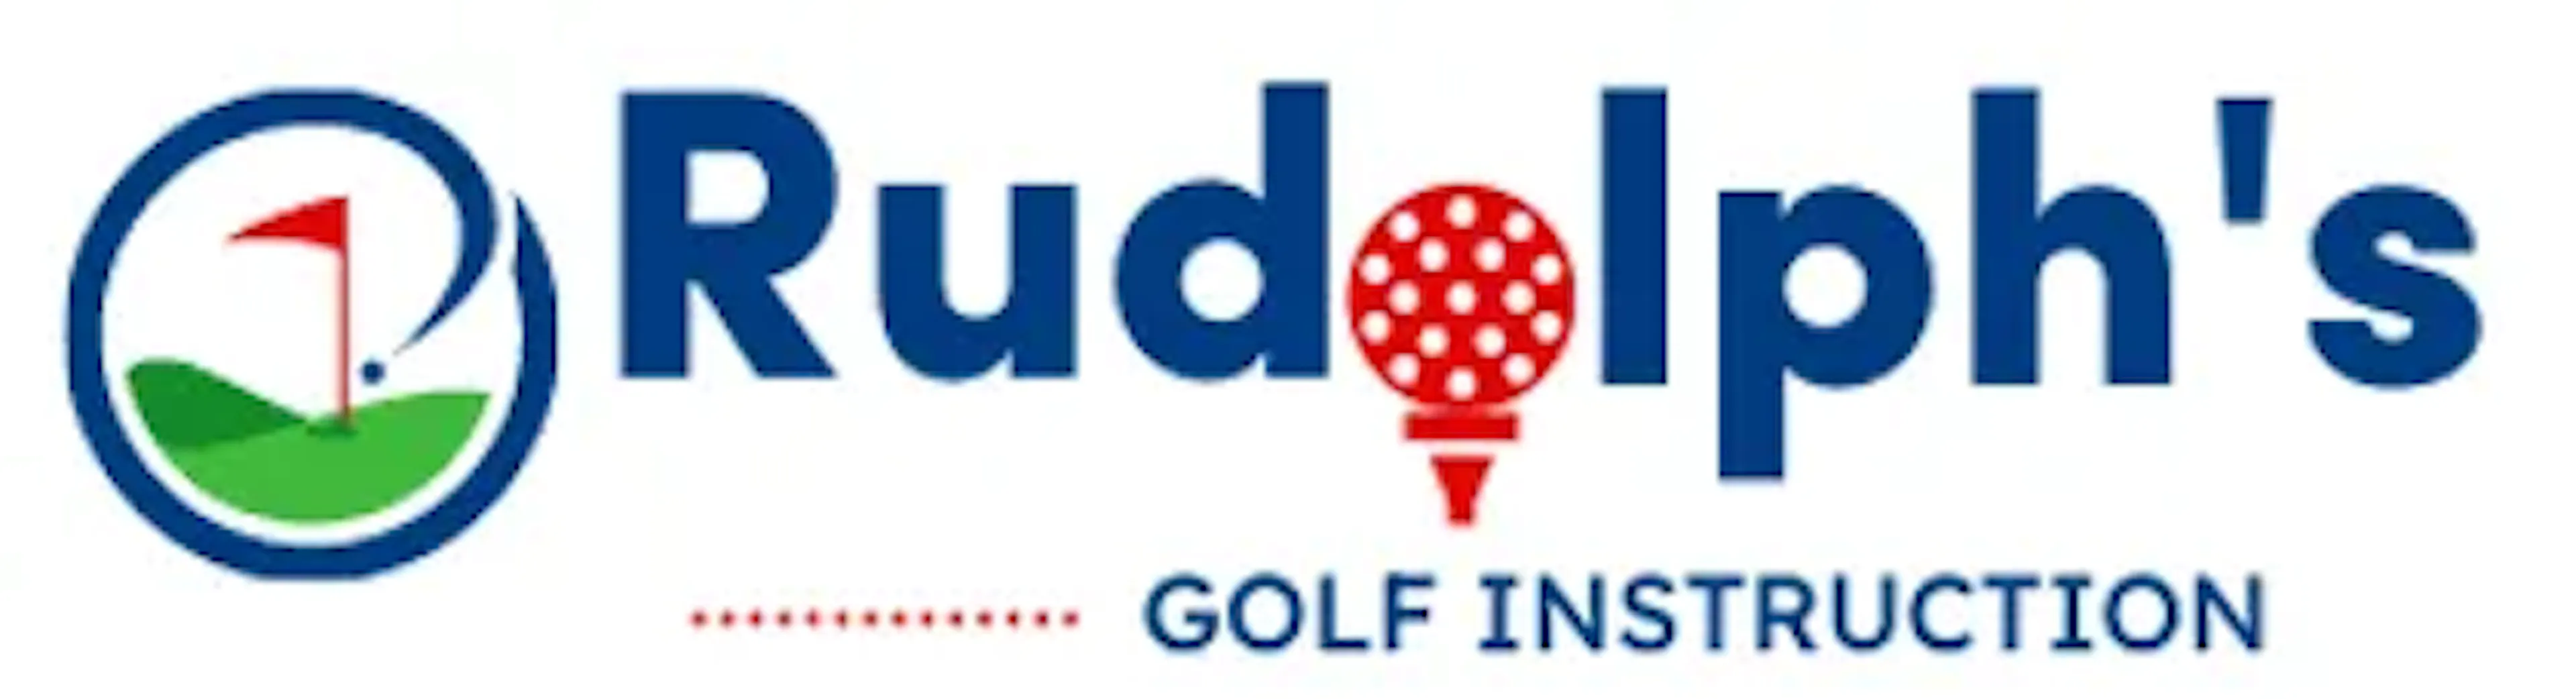 rudolph's golf instruction